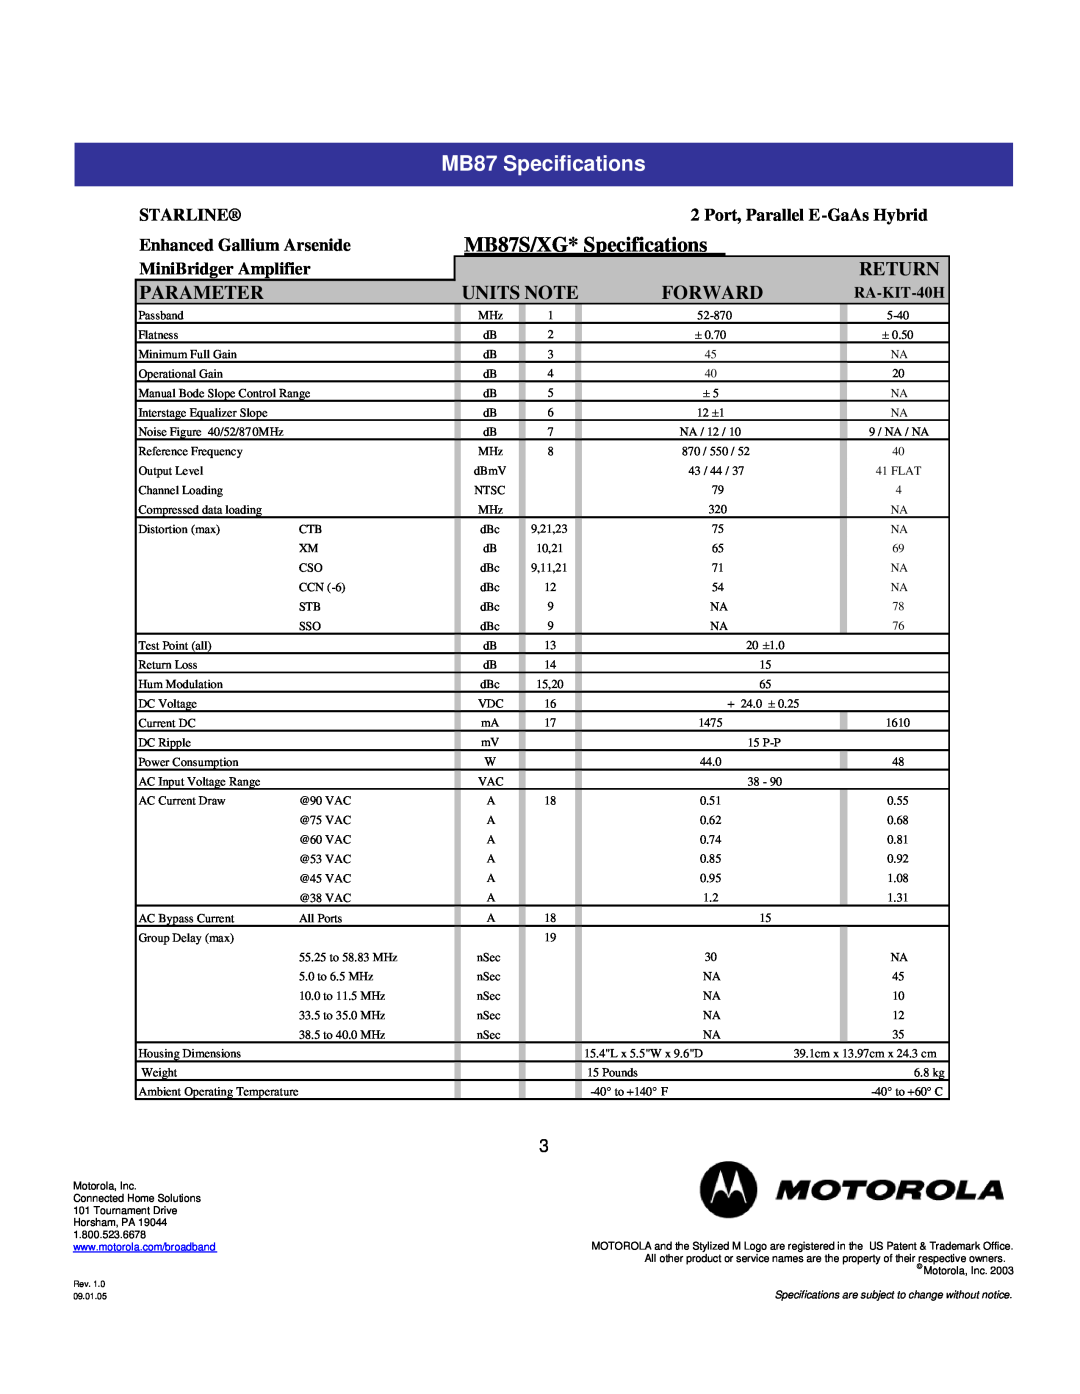 Motorola MB87 Specifications, MB87S/XG* Specifications, Parameter, Units Note, Forward, Return, Starline, RA-KIT-40H 